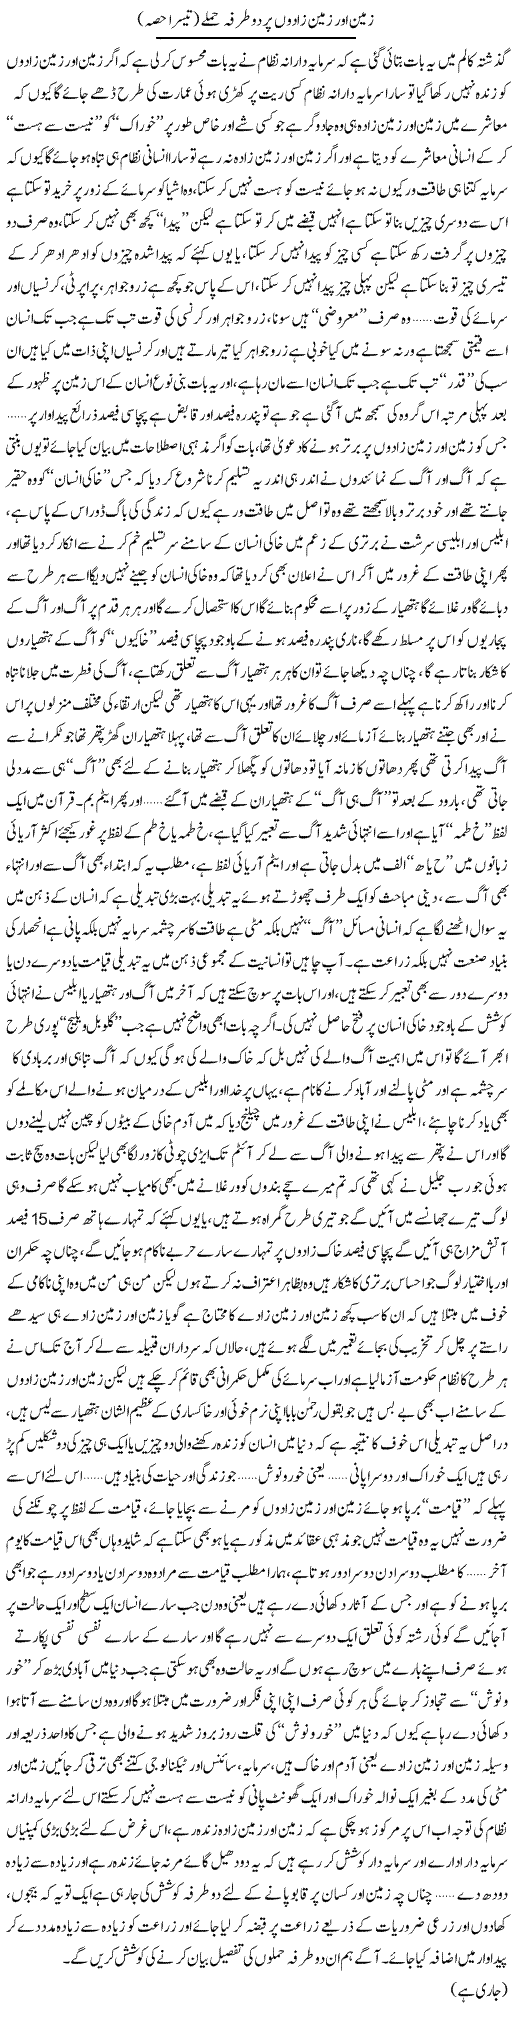 Zameen Our Zameen Zadon Per Do Tarfa Hamle | Saad Ullah Jan Barq | Daily Urdu Columns